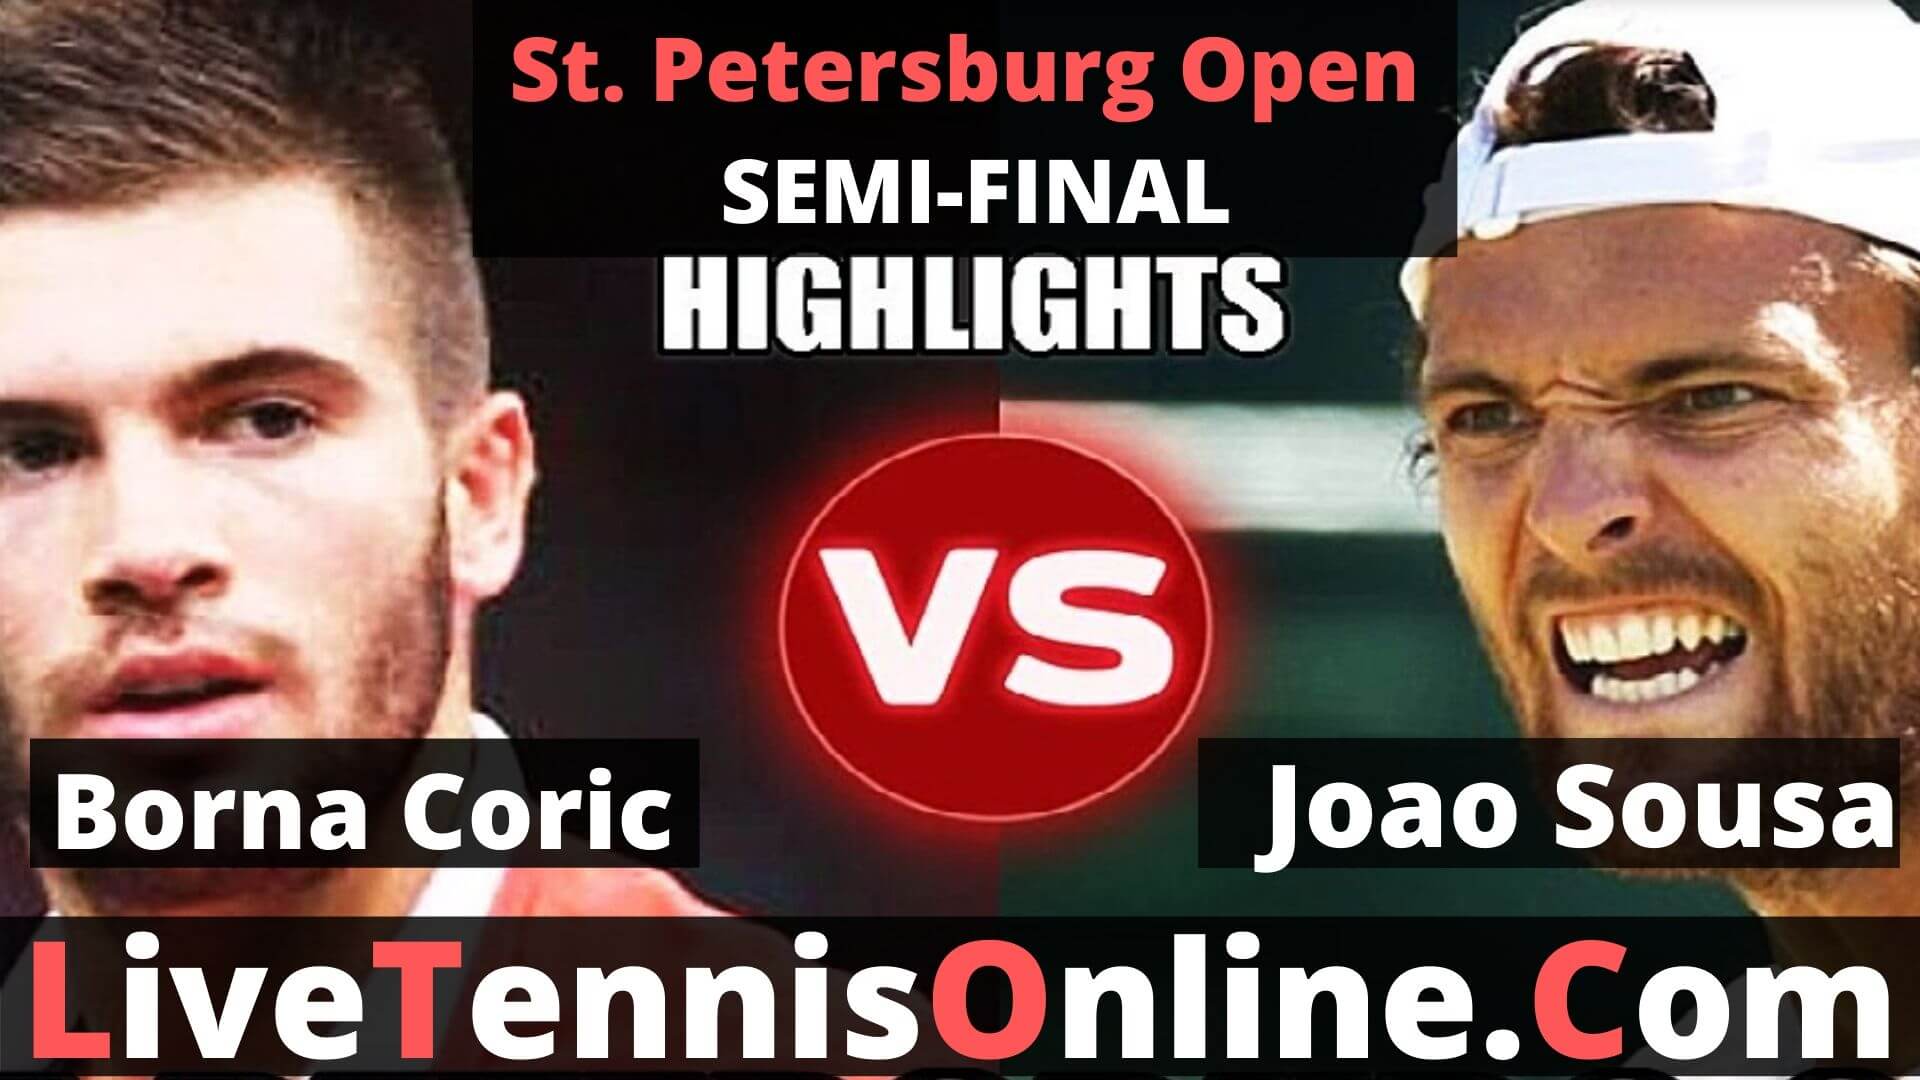  Borna Coric Vs Joao Sousa Highlights 2019 St. Petersburg Open SF